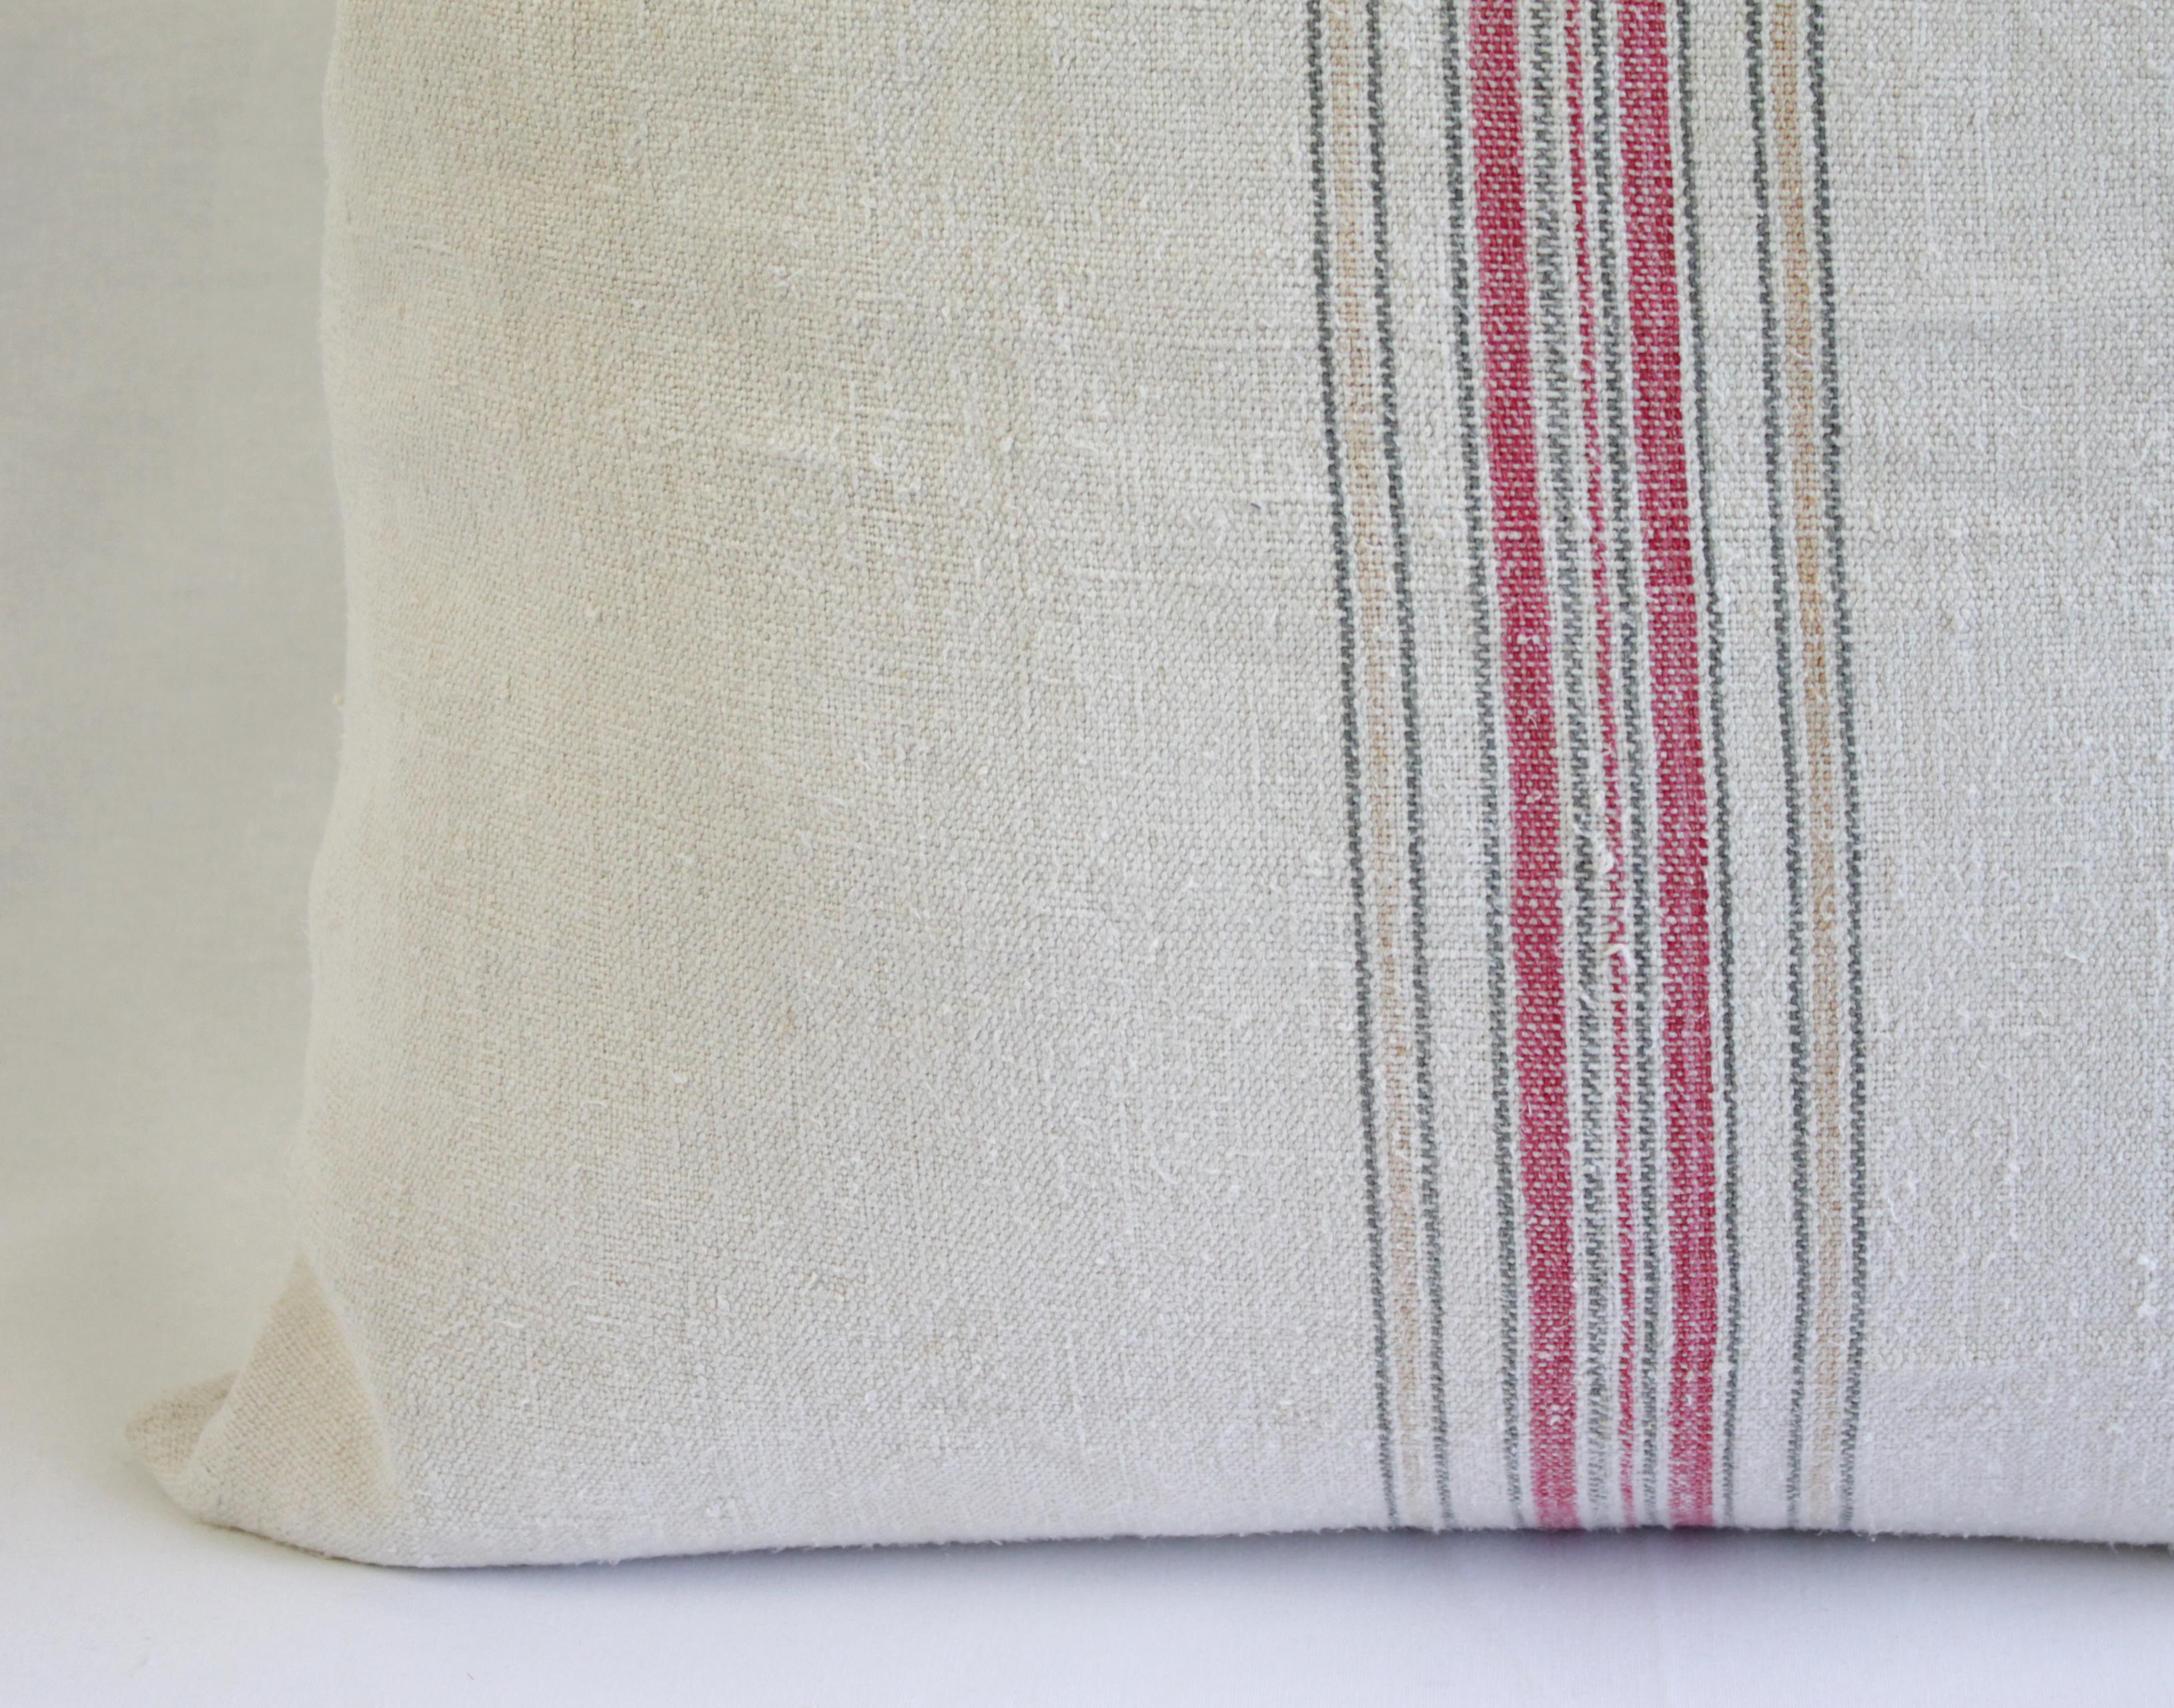 Linen Antique Nubby 19th Century European Red and Tan Stripe Grain Sack Pillows